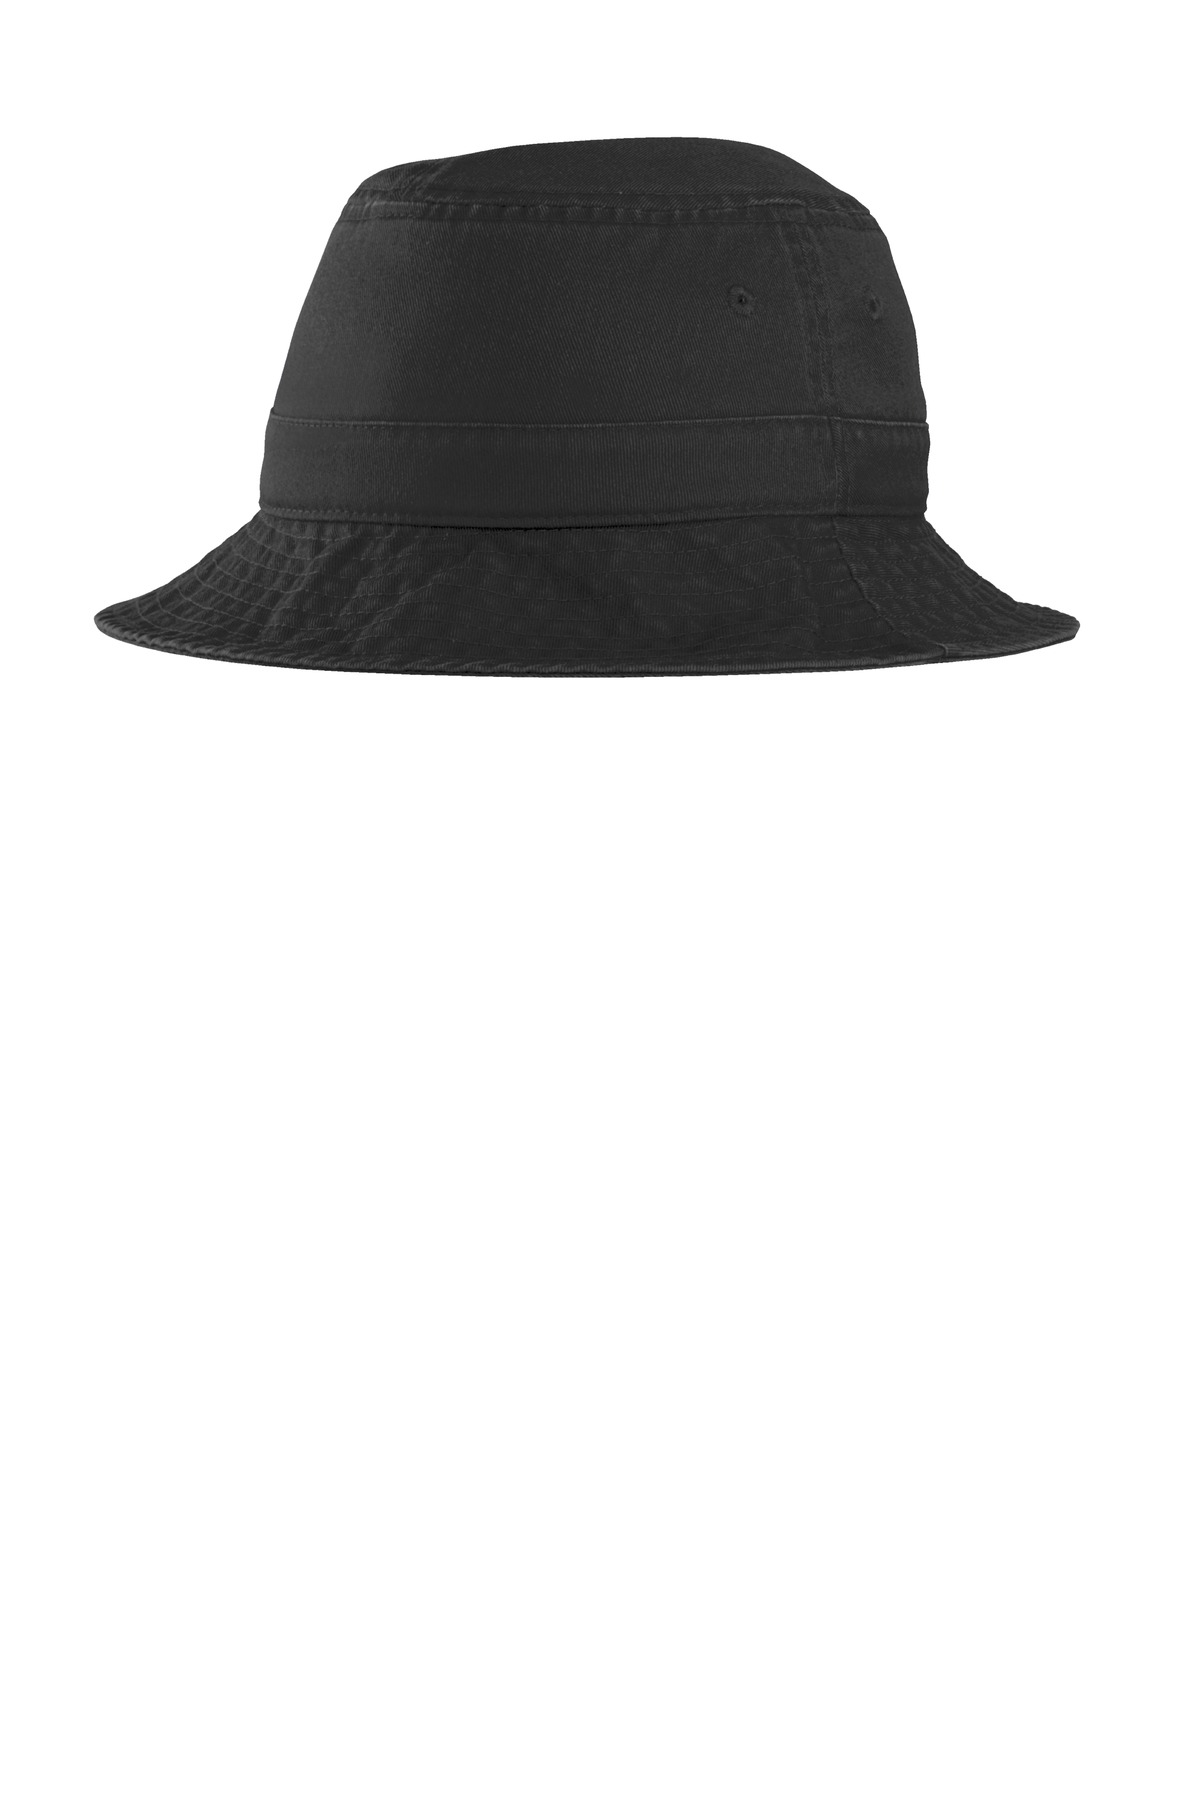 Port Authority Hospitality Caps ® Bucket Hat.-Port Authority